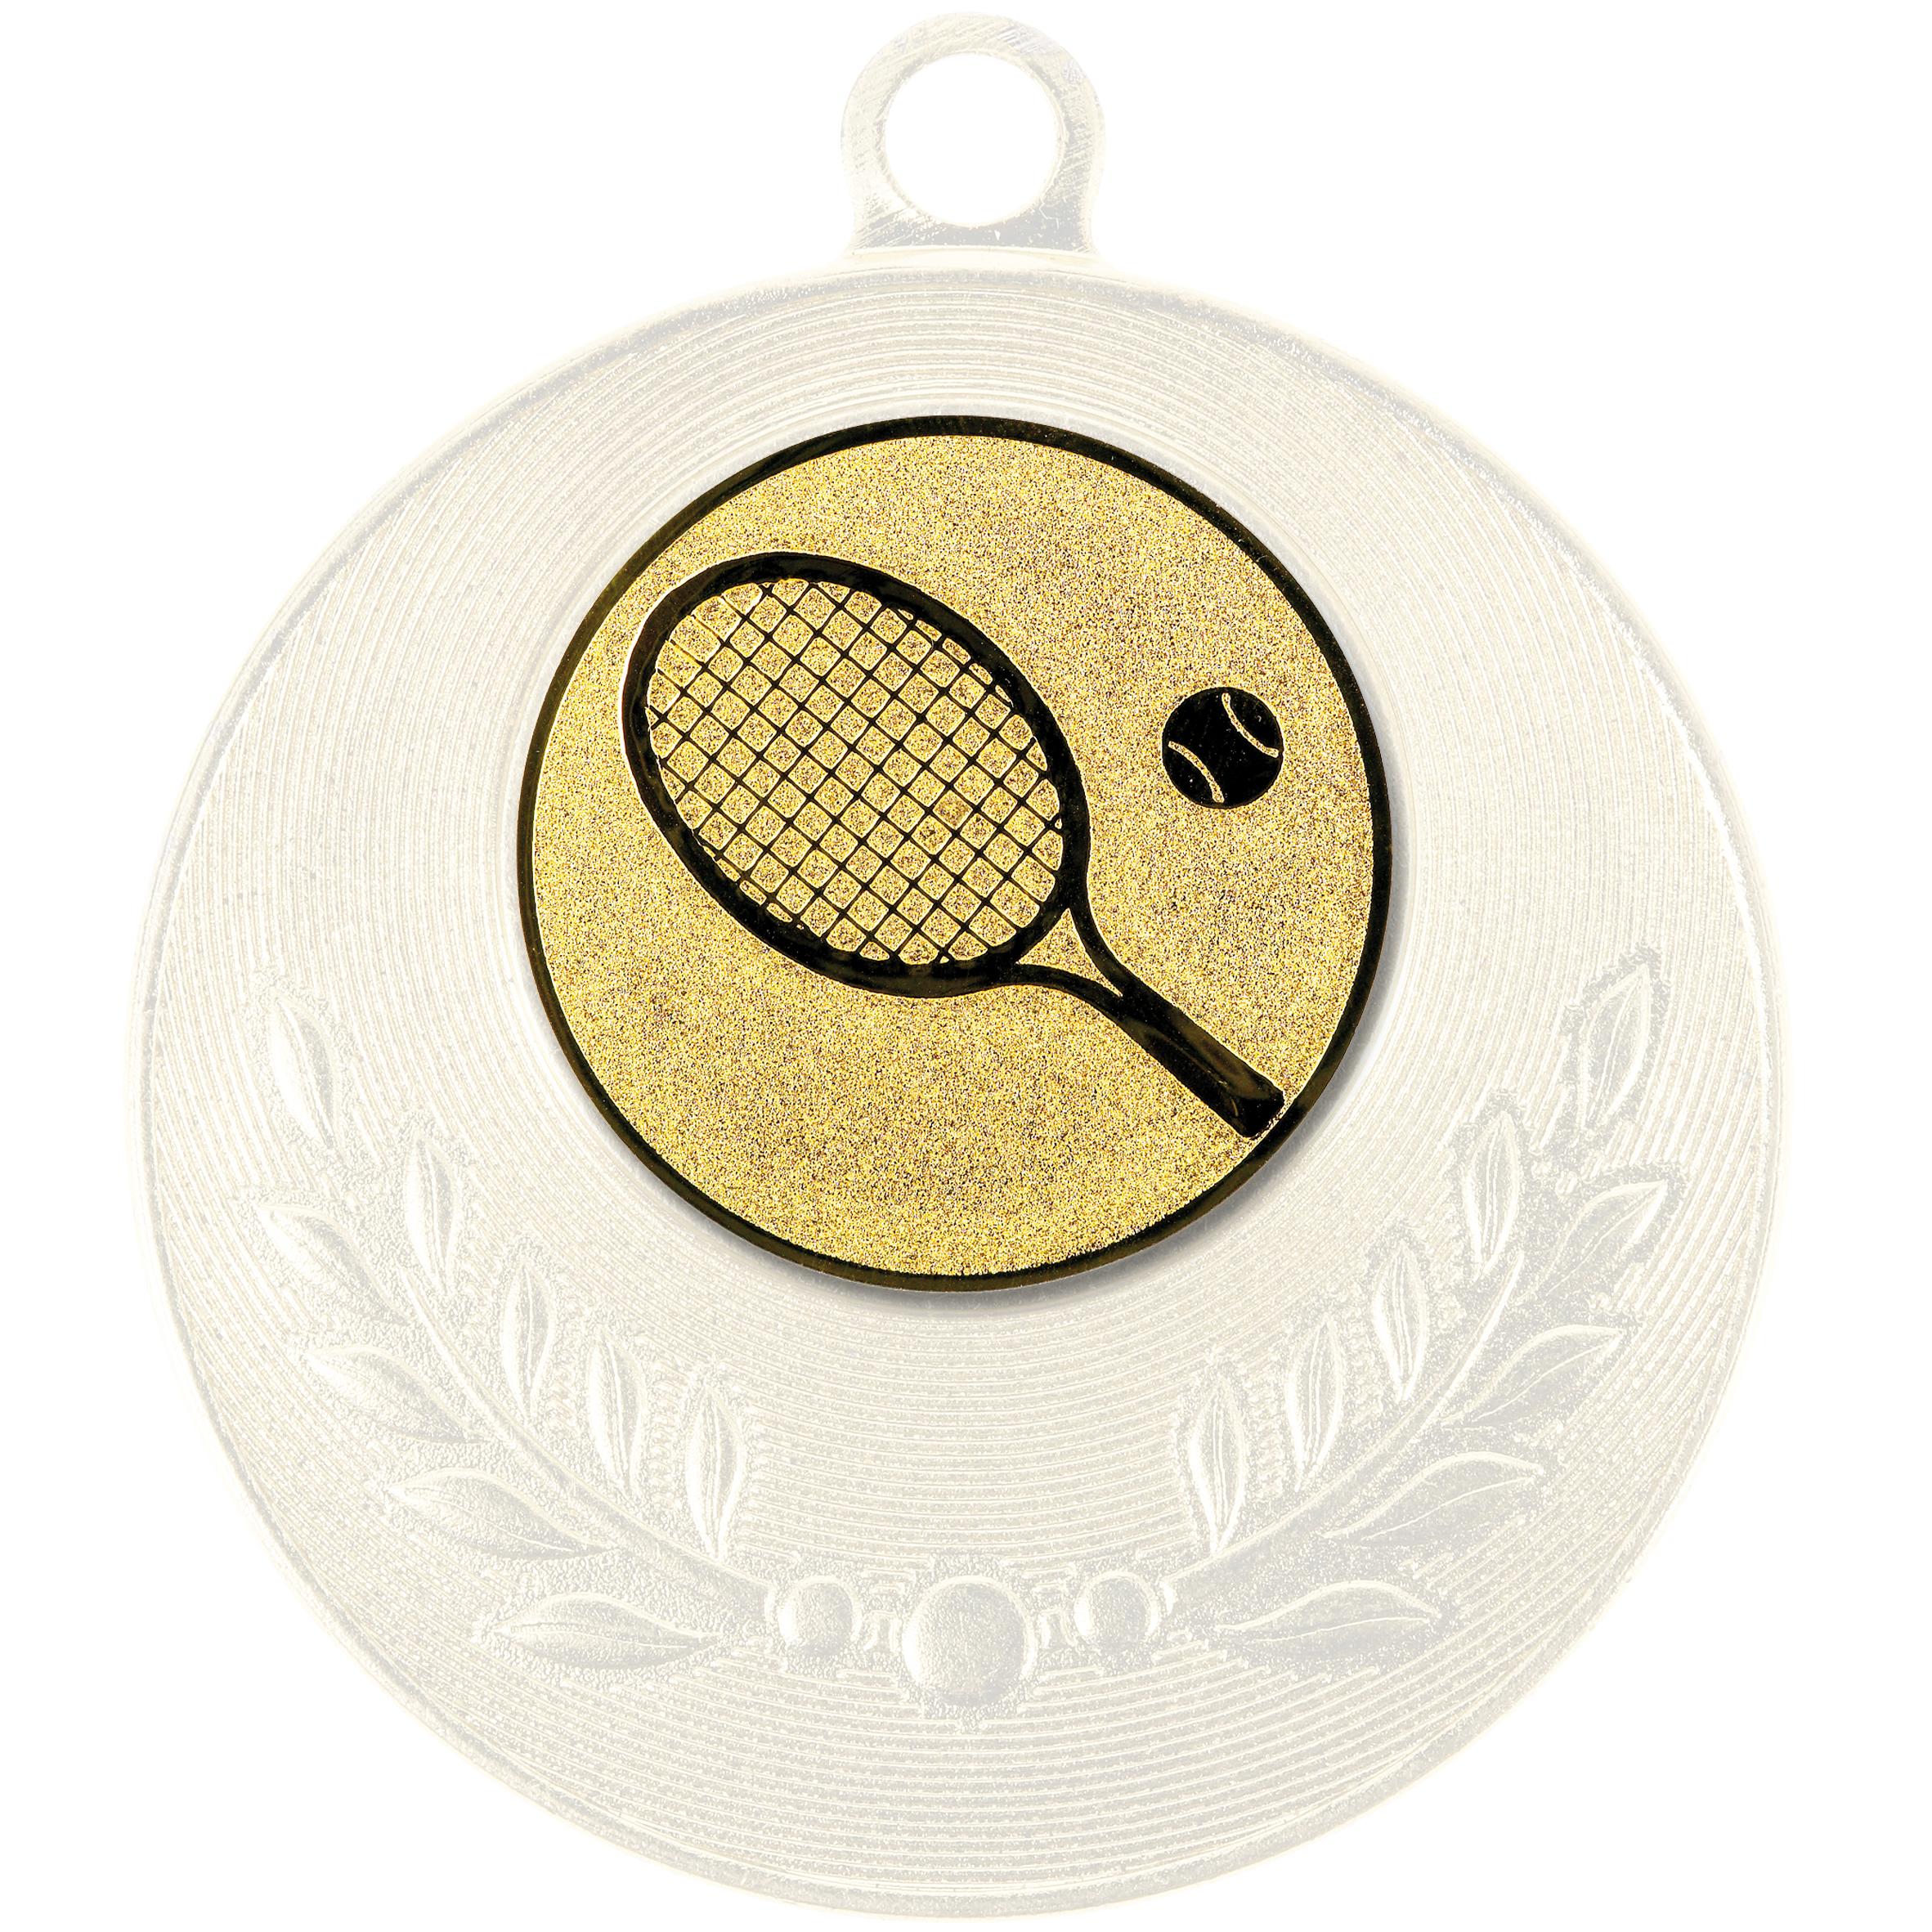 Sticker Tenis pentru premierea performanțelor sportive 25 mm